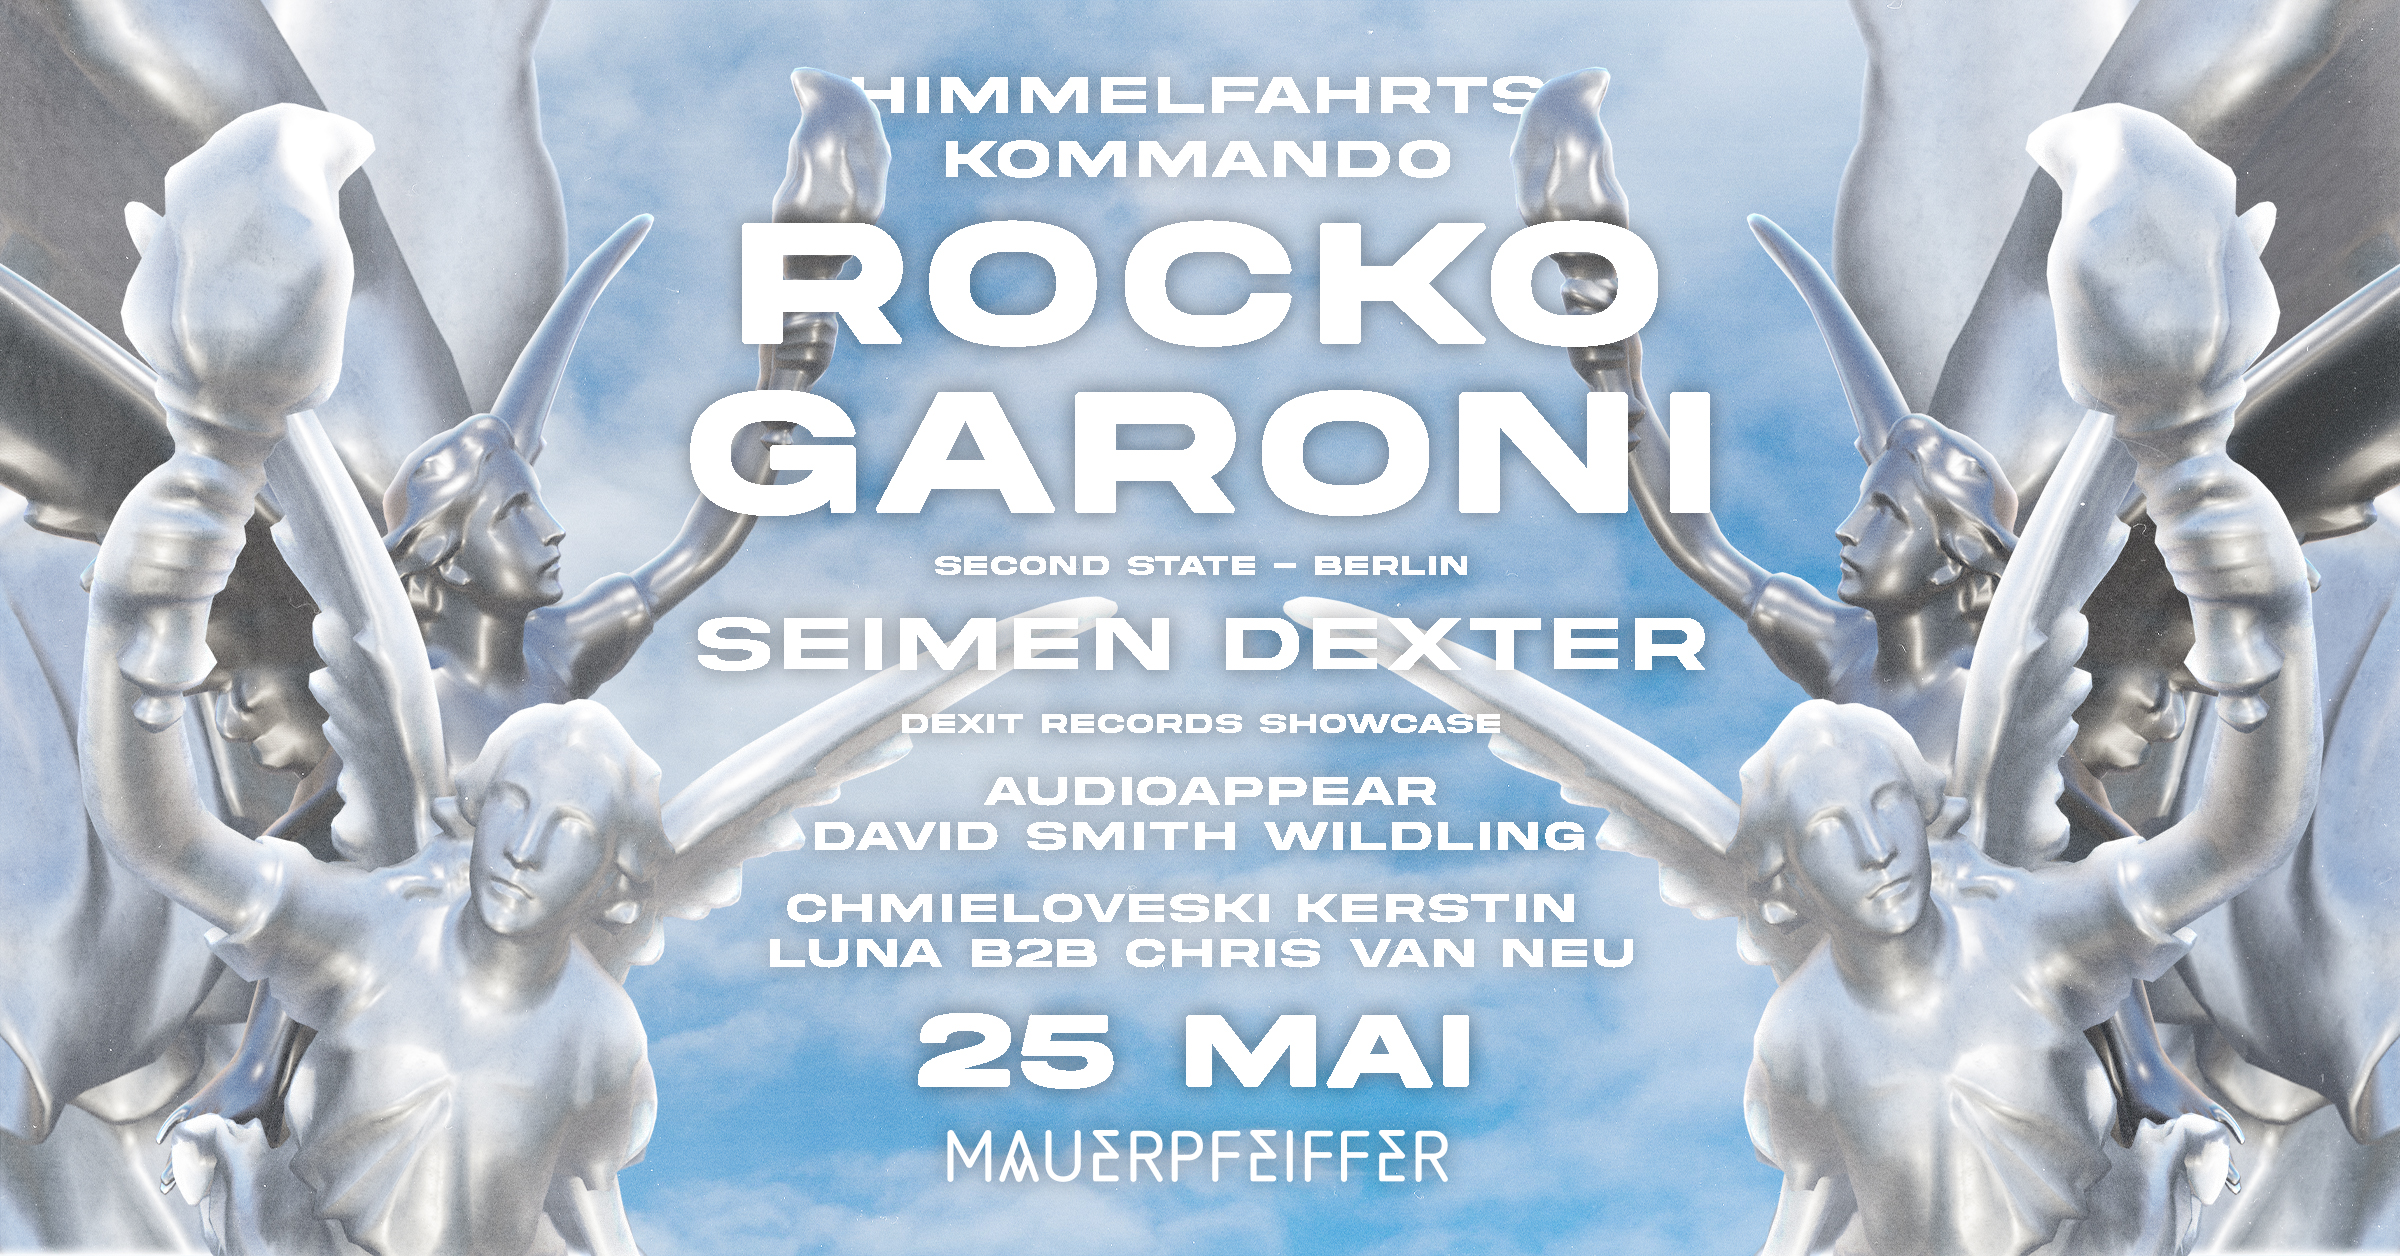 Himmelsfahrts Kommando w/ Rocko Garoni ( Berlin ) Seimen Dexter ( DEXIT Records )